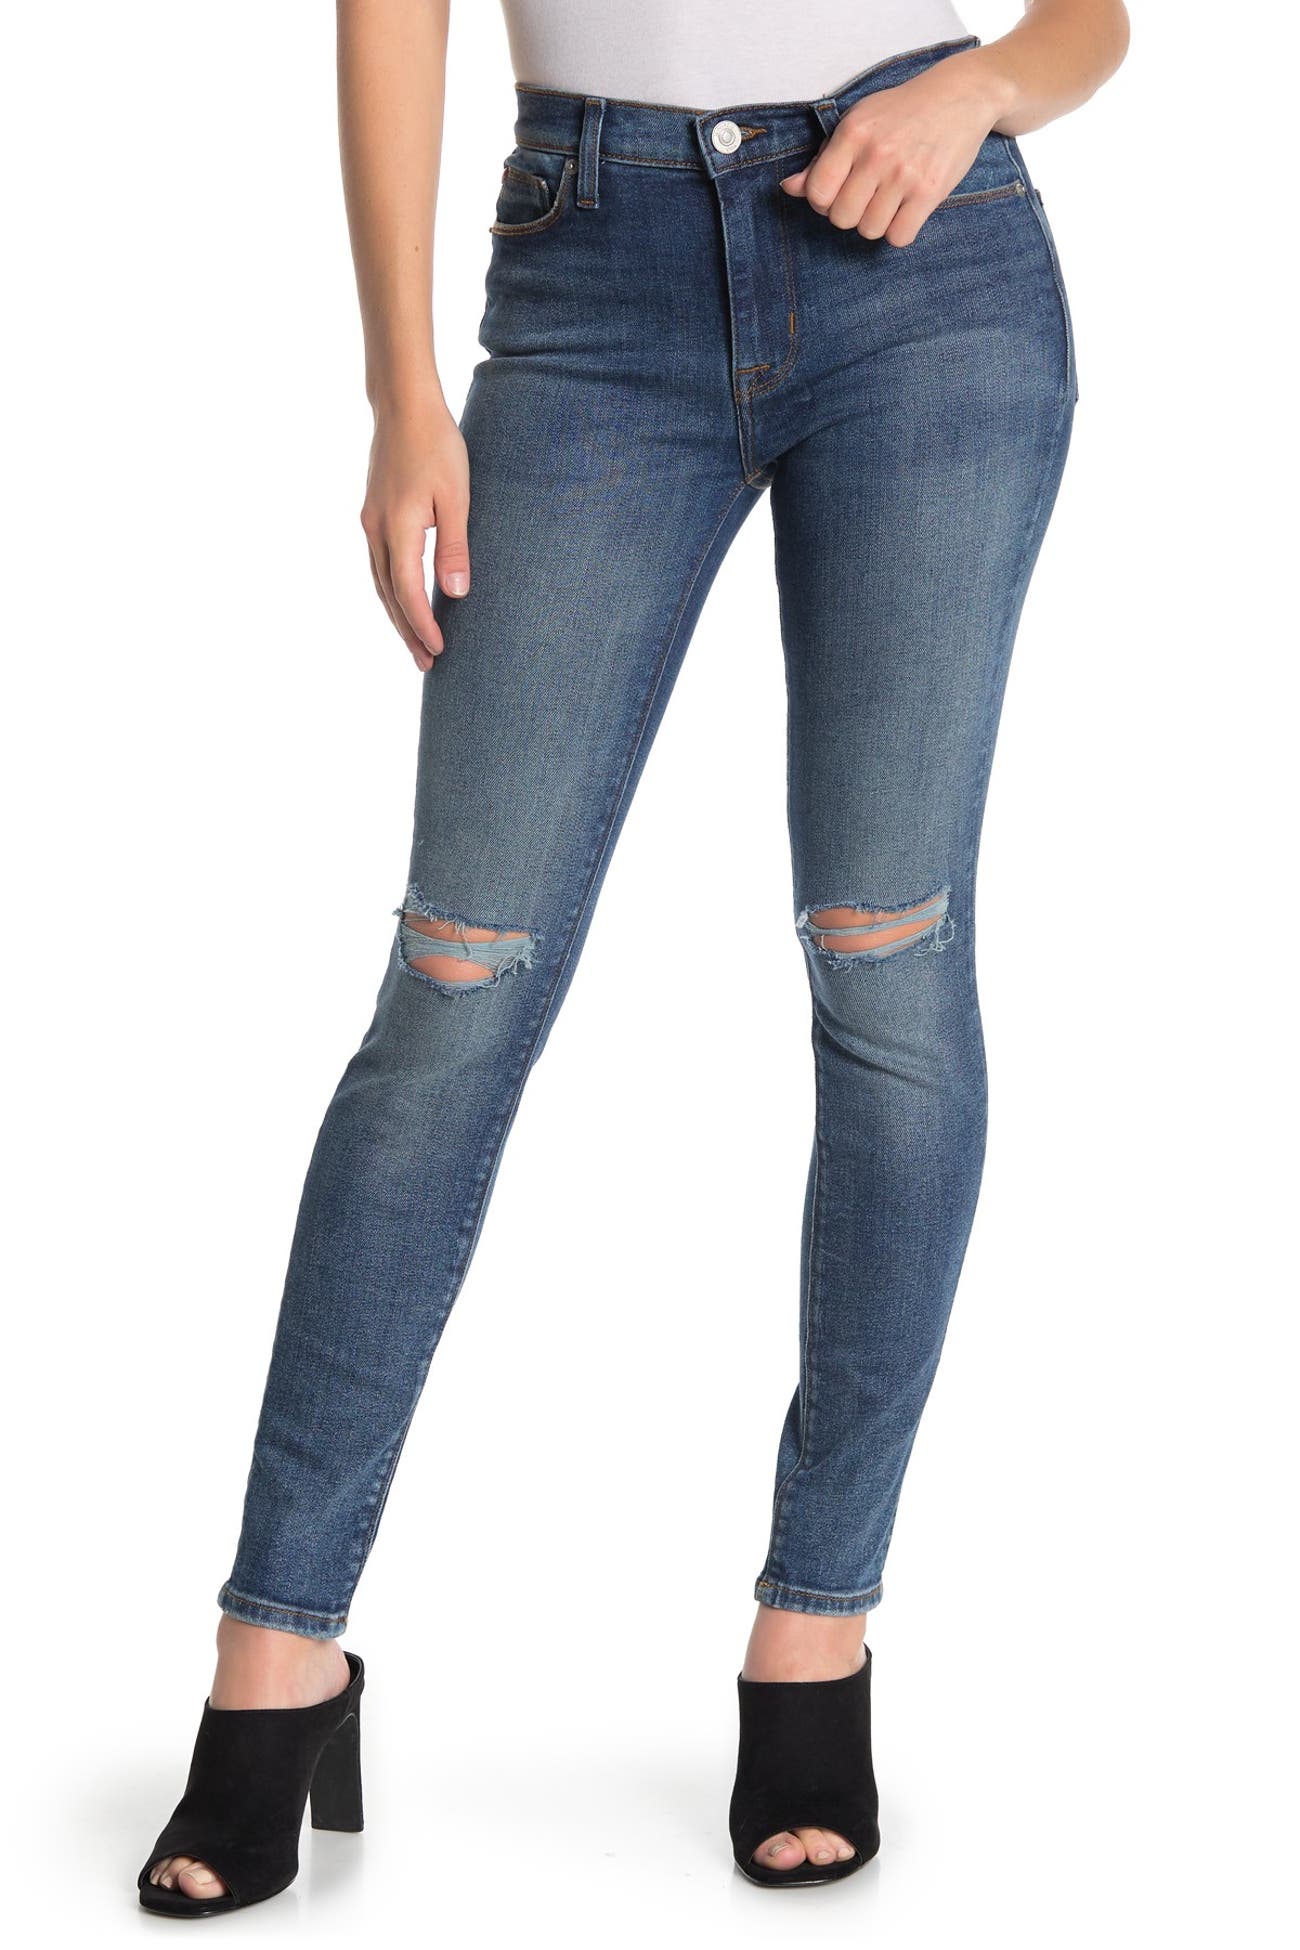 HUDSON Jeans | Blair Super Skinny Jeans | Nordstrom Rack